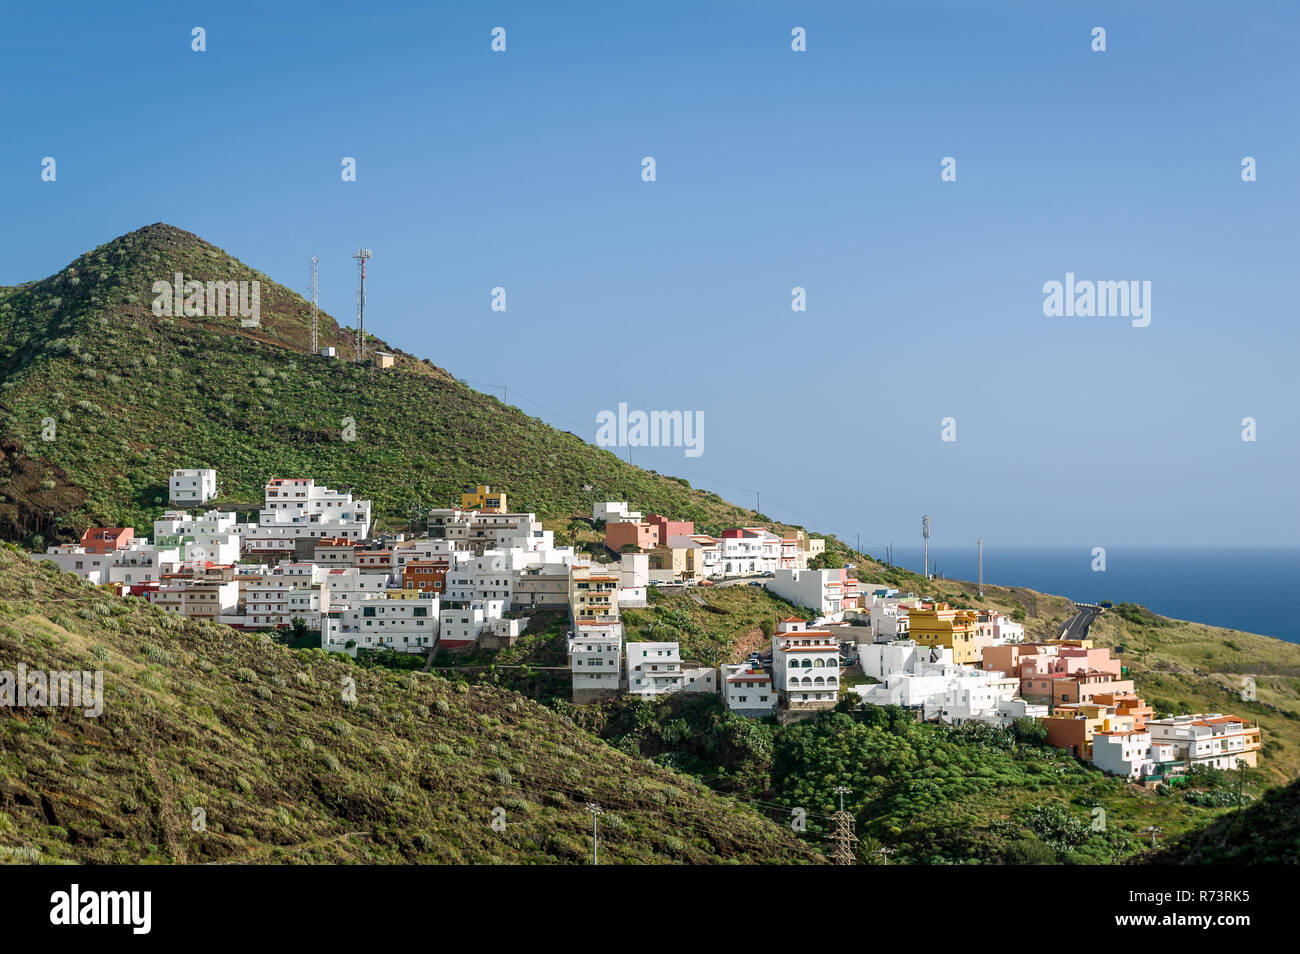 New village on the mountain slope of Tenerife island Stock Photo